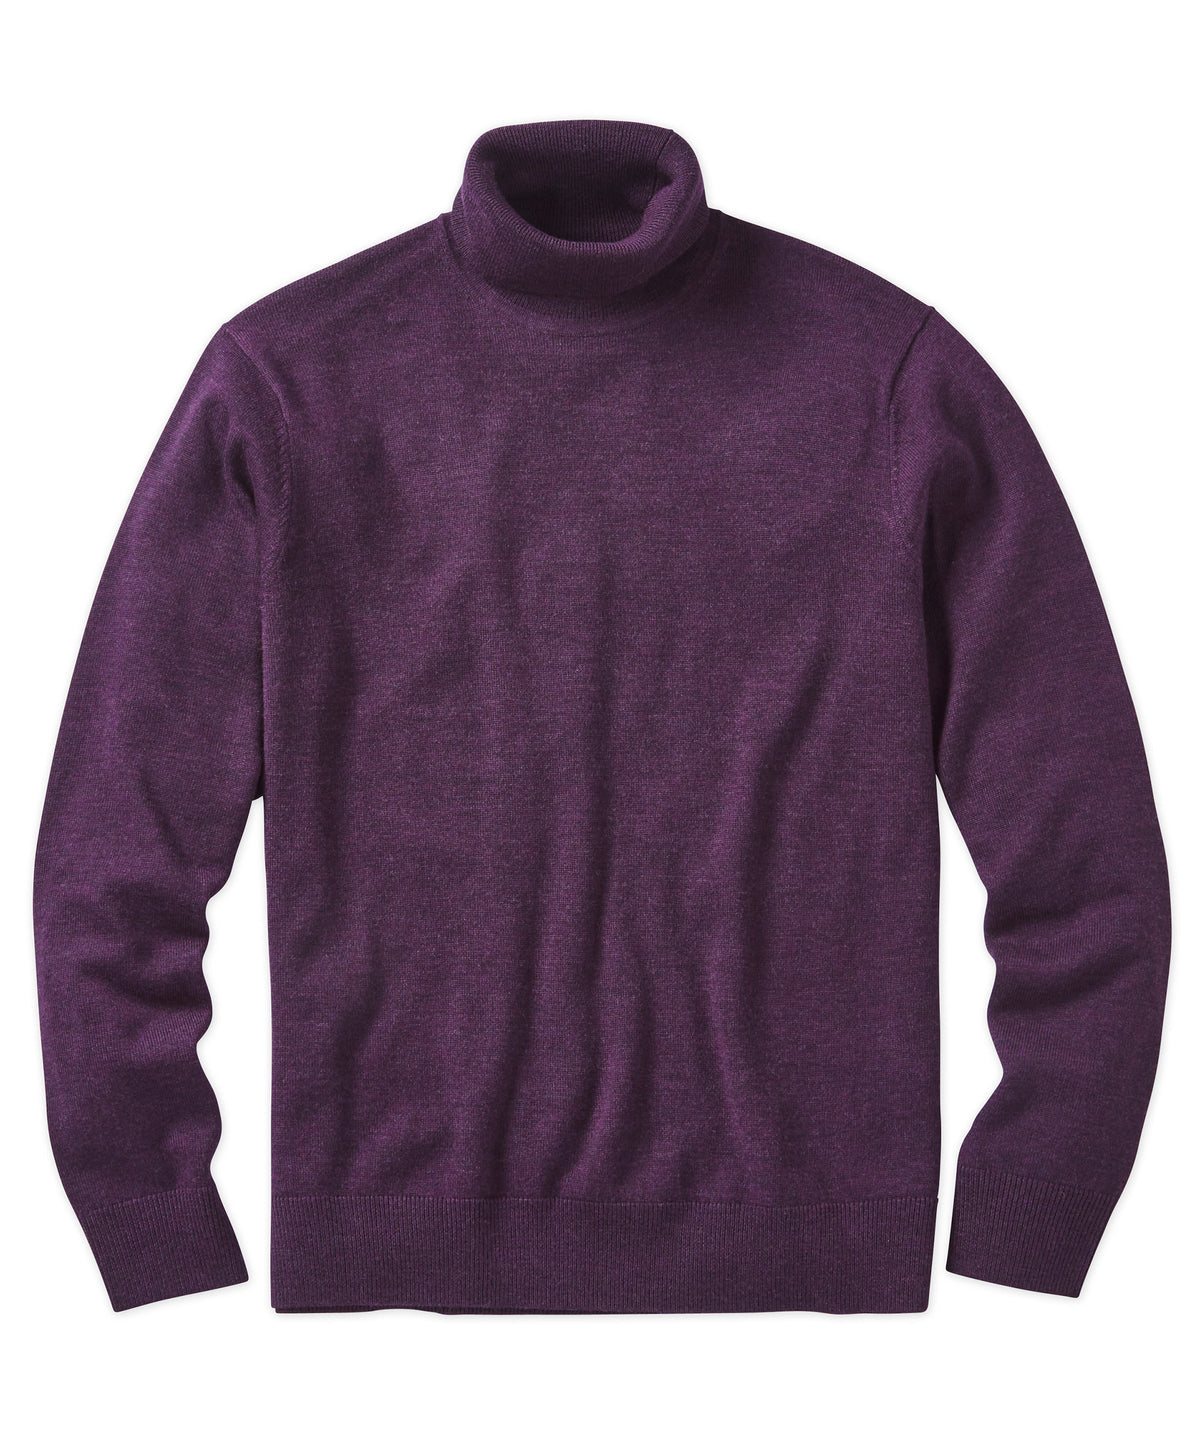 Raffi Italian Merino Wool Turtleneck Sweater